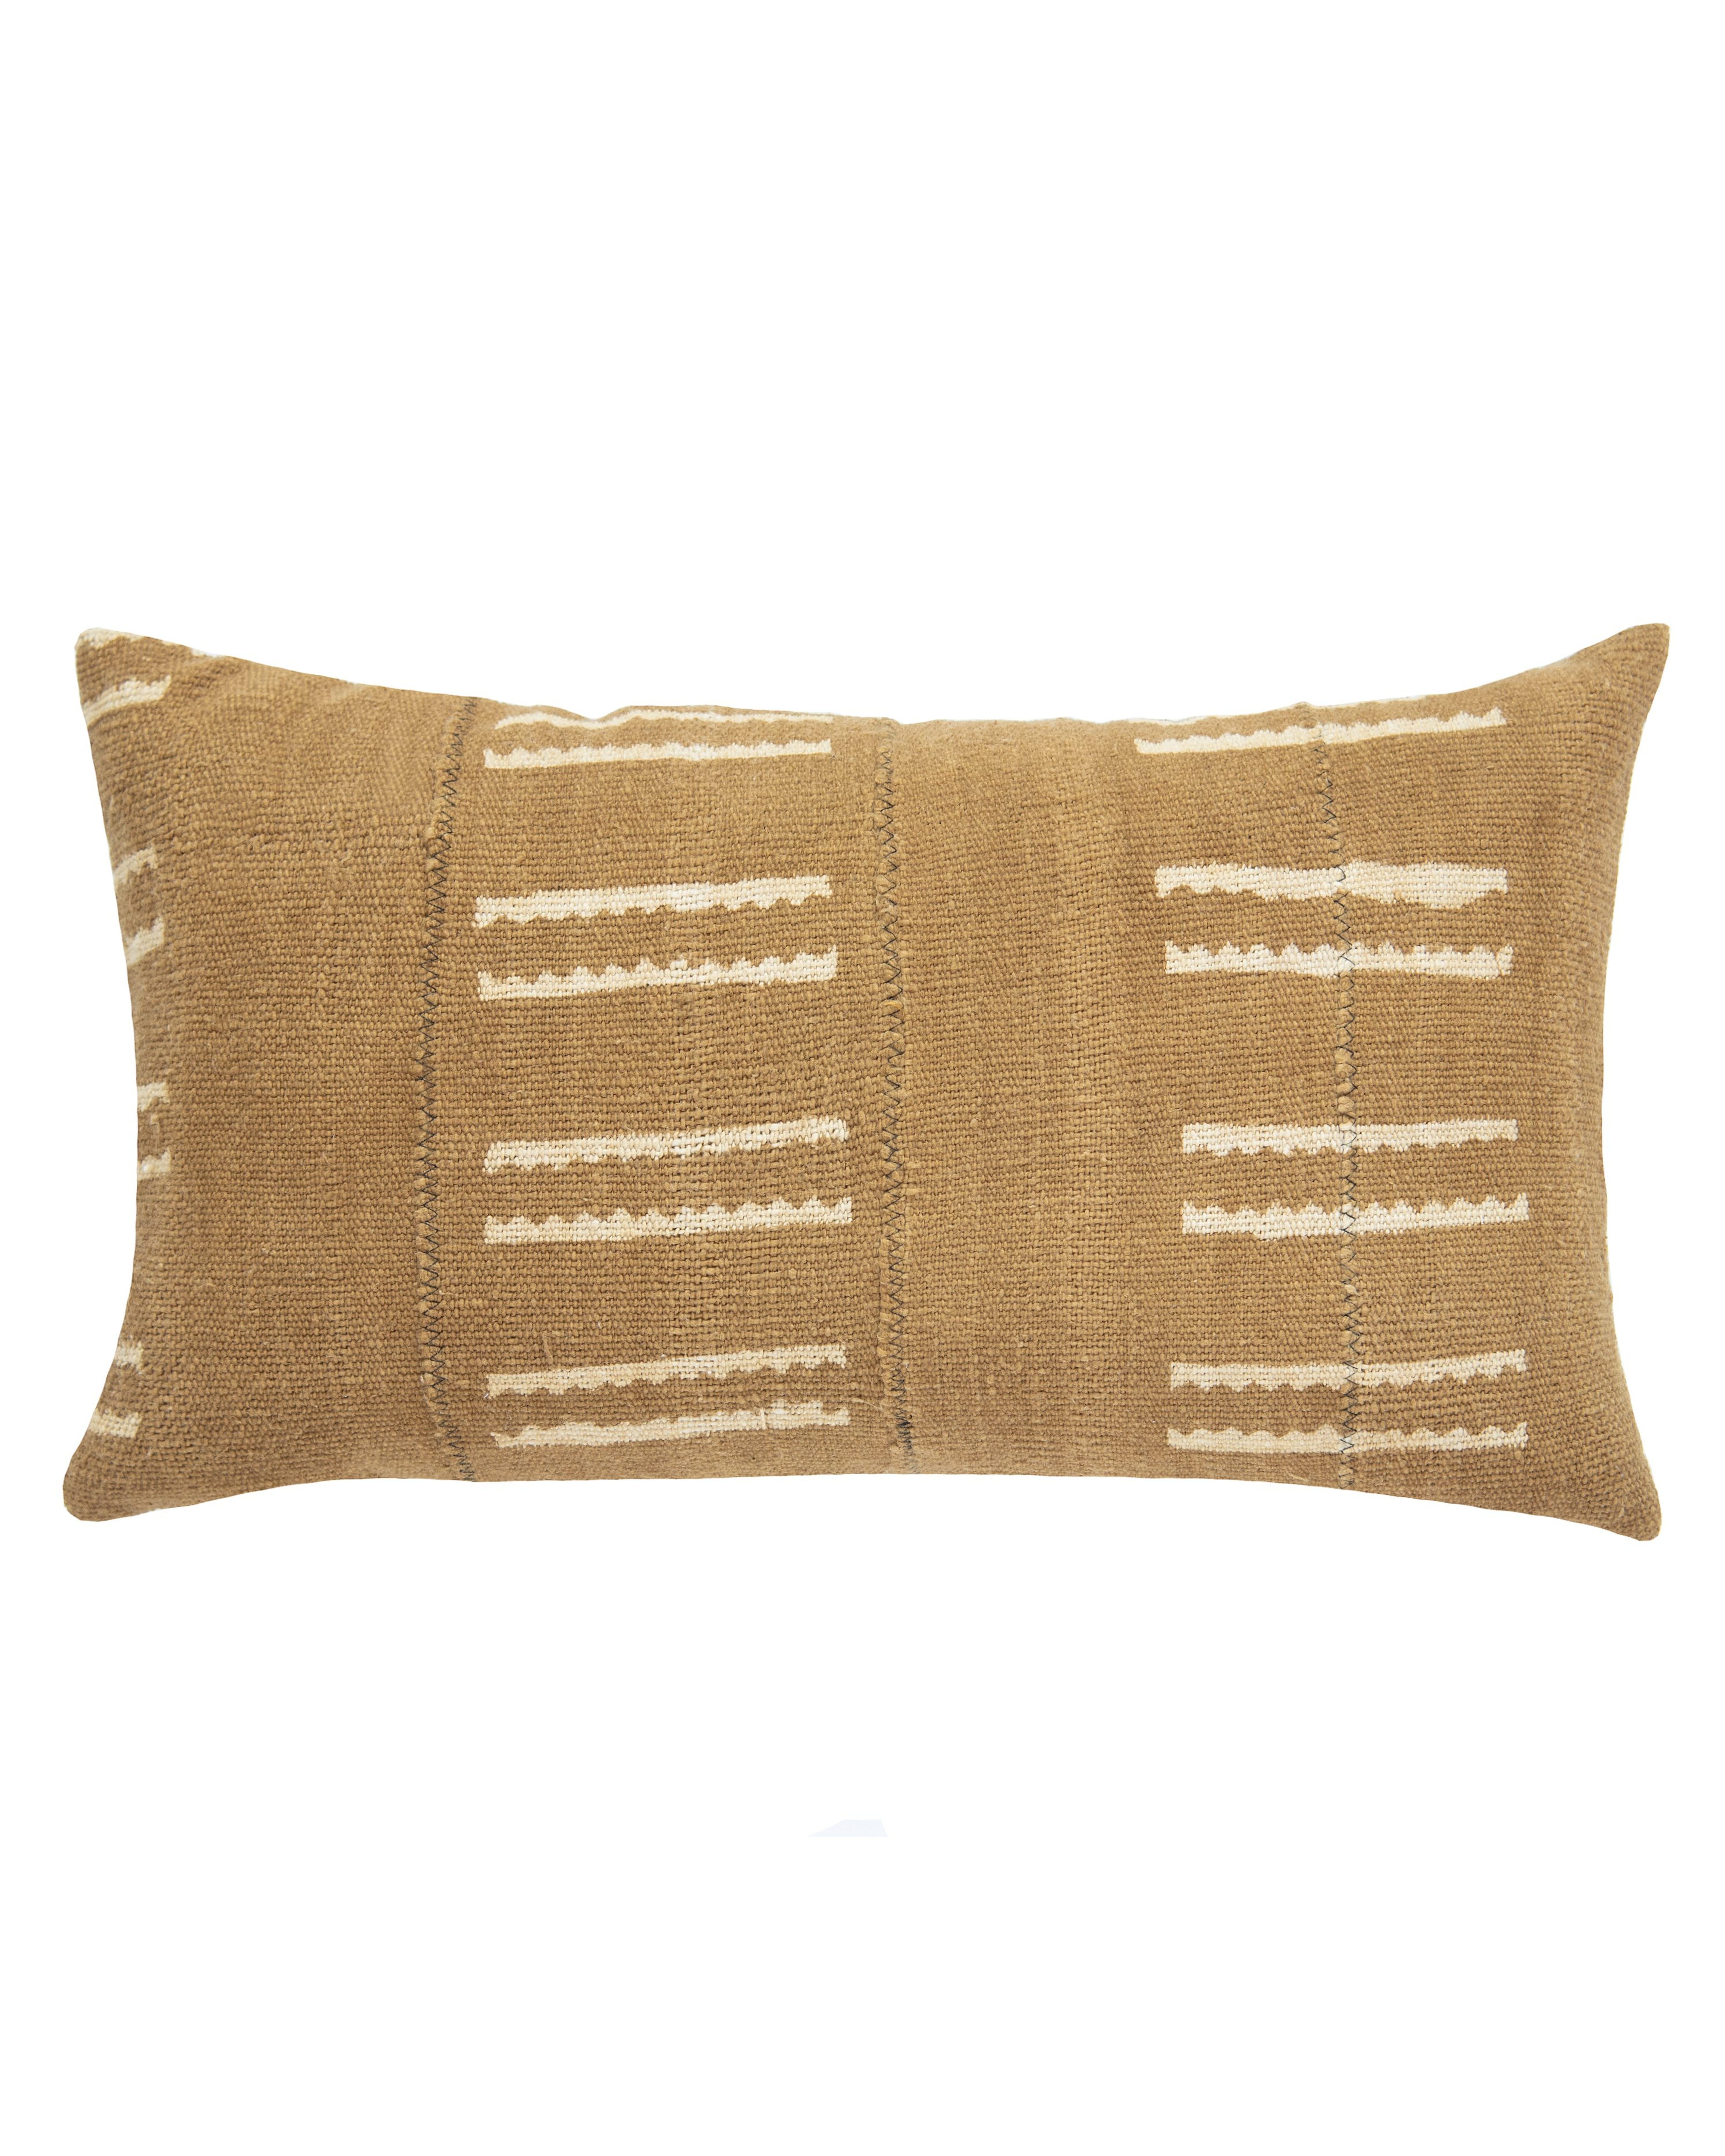 snake bone mud cloth lumbar pillow in tan - PillowPia